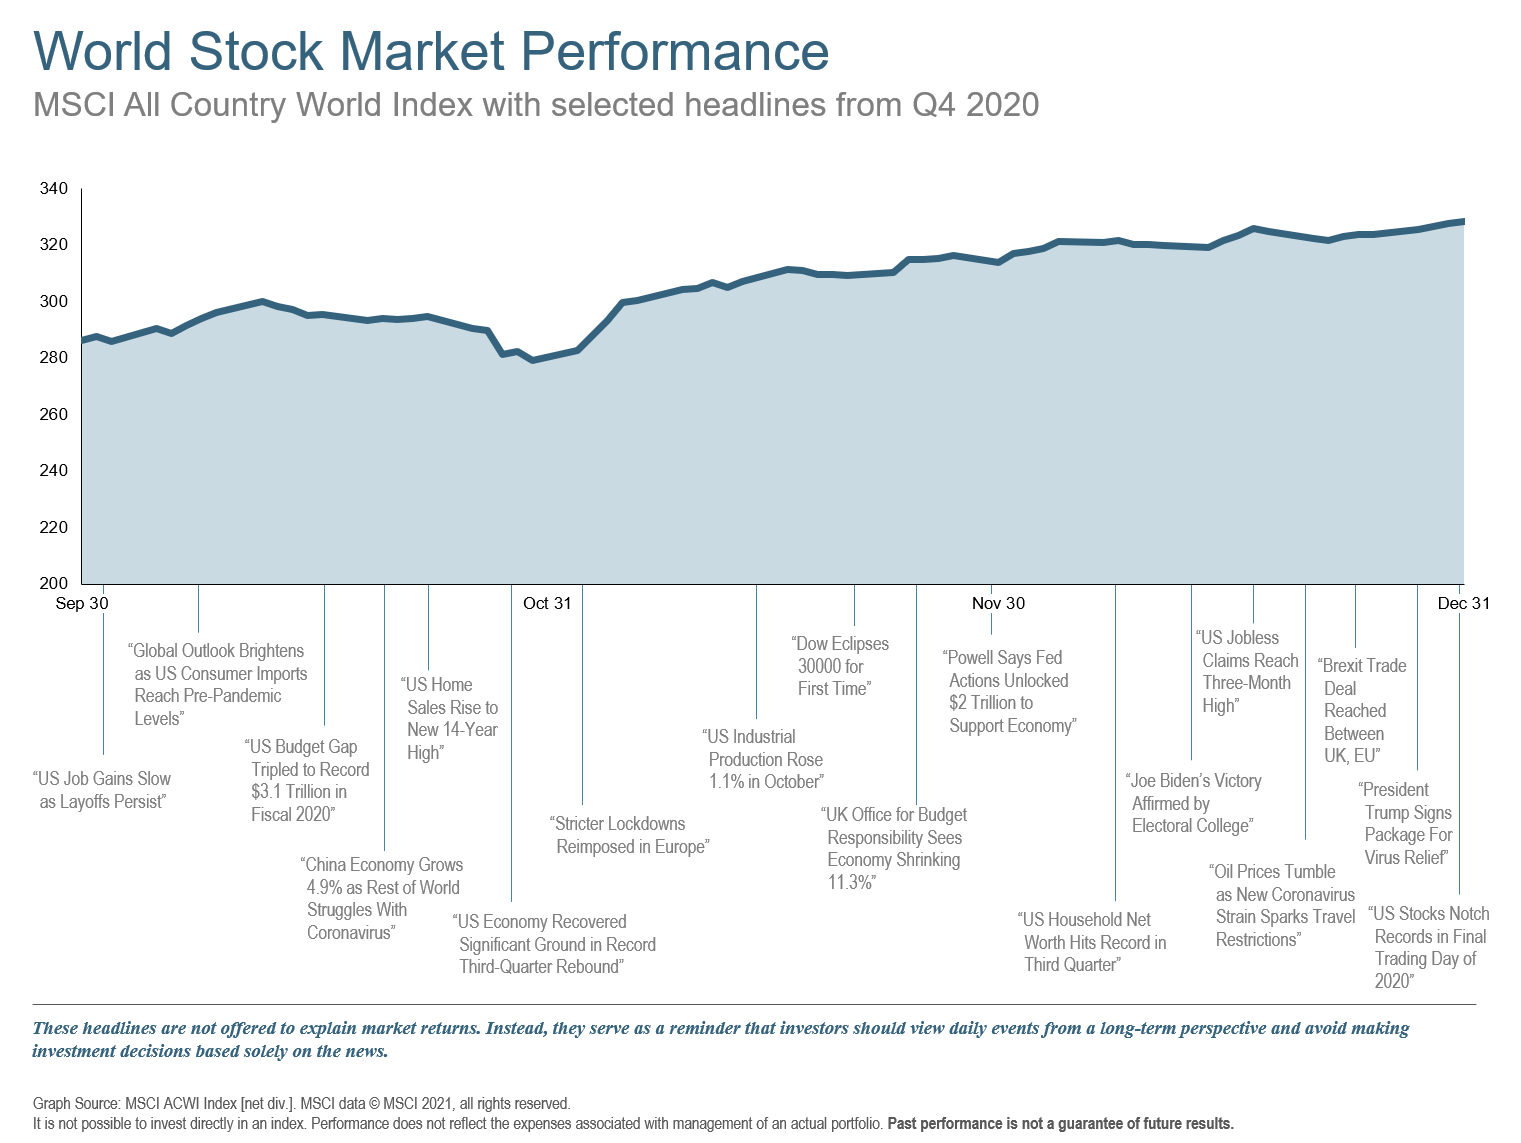 Q4 2020 World Stock Market Performance.png